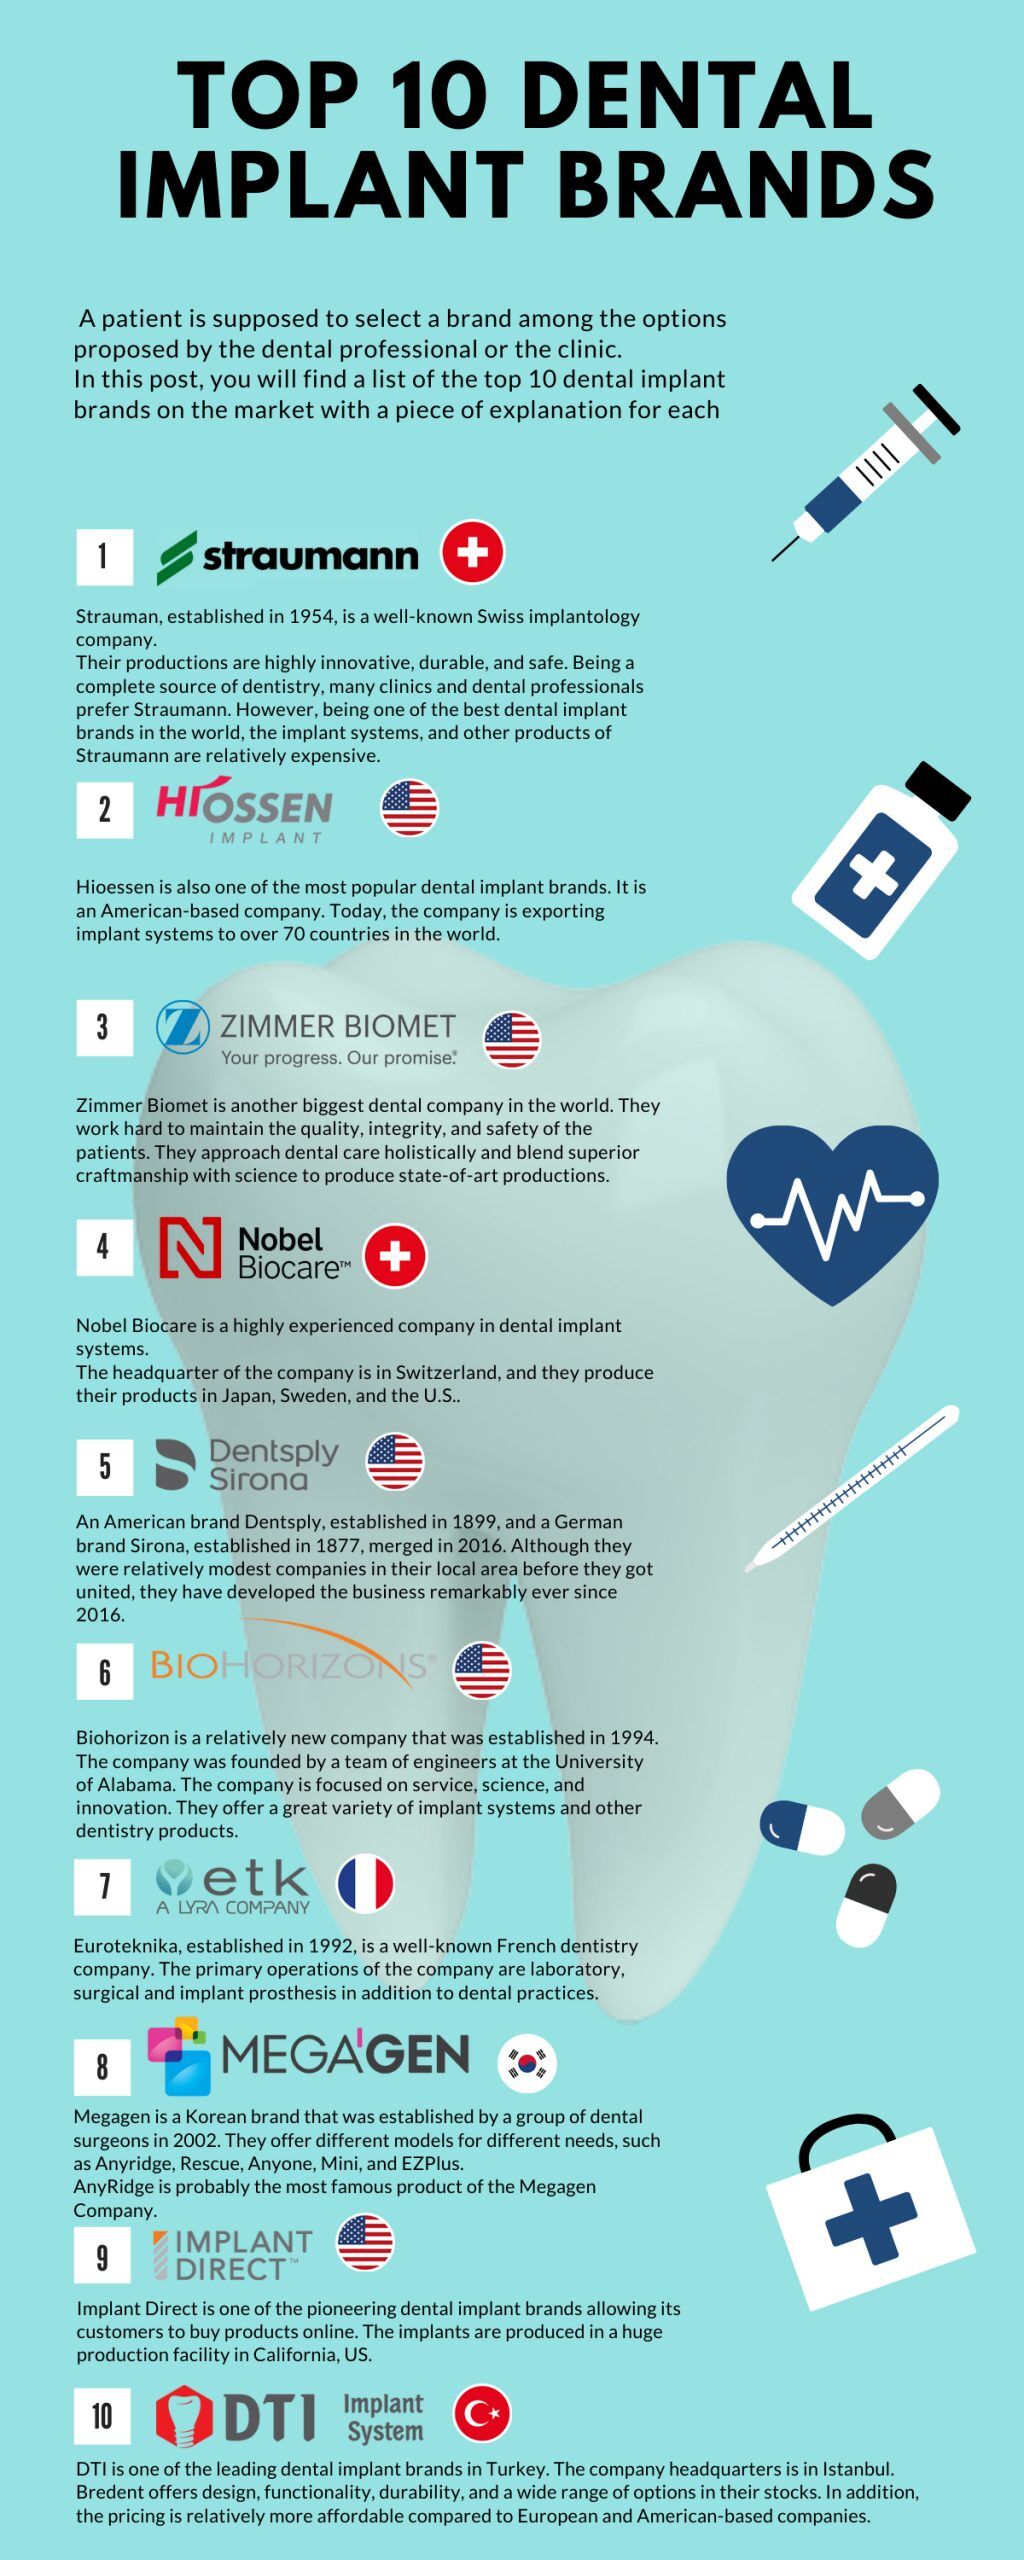 Top 10 Dental Insurance for Implants